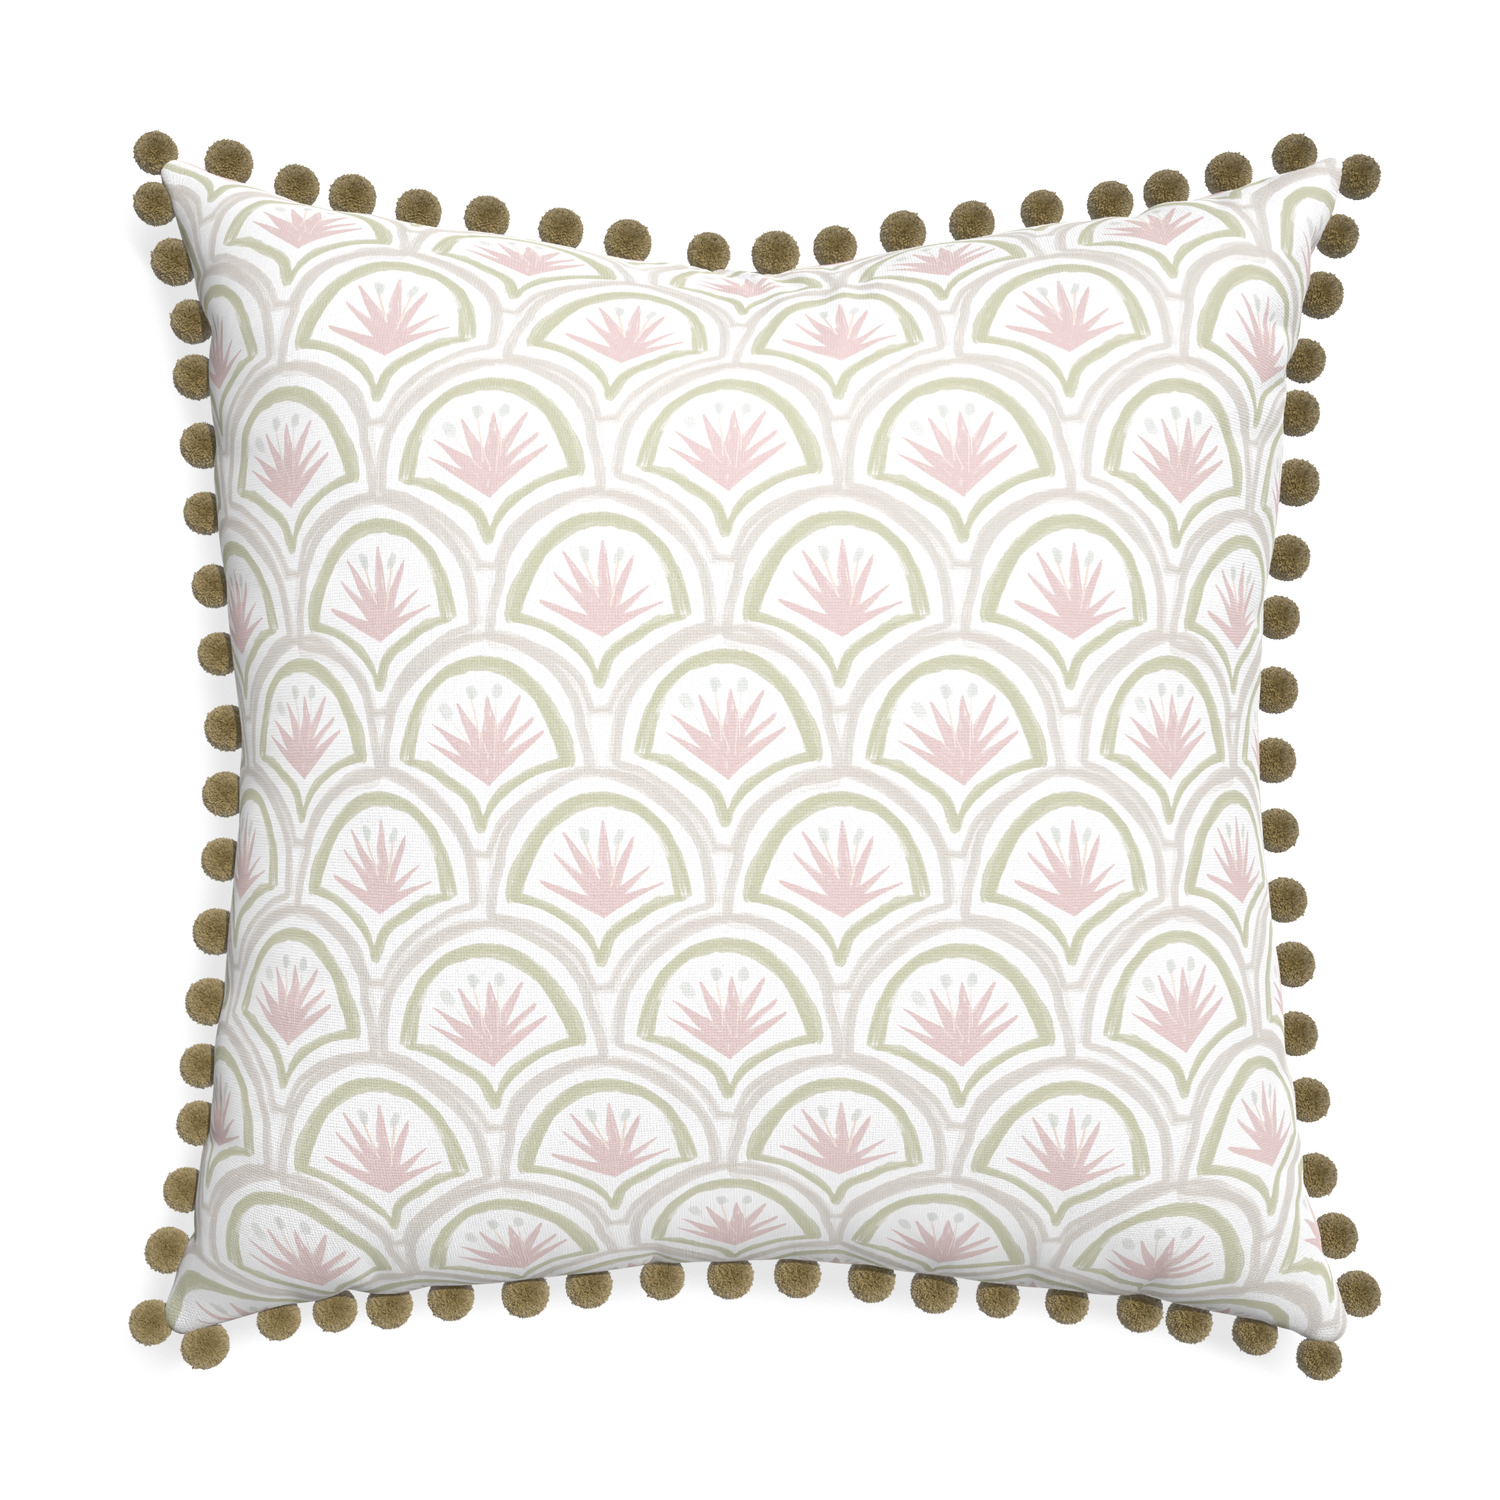 Euro-sham thatcher rose custom pillow with olive pom pom on white background